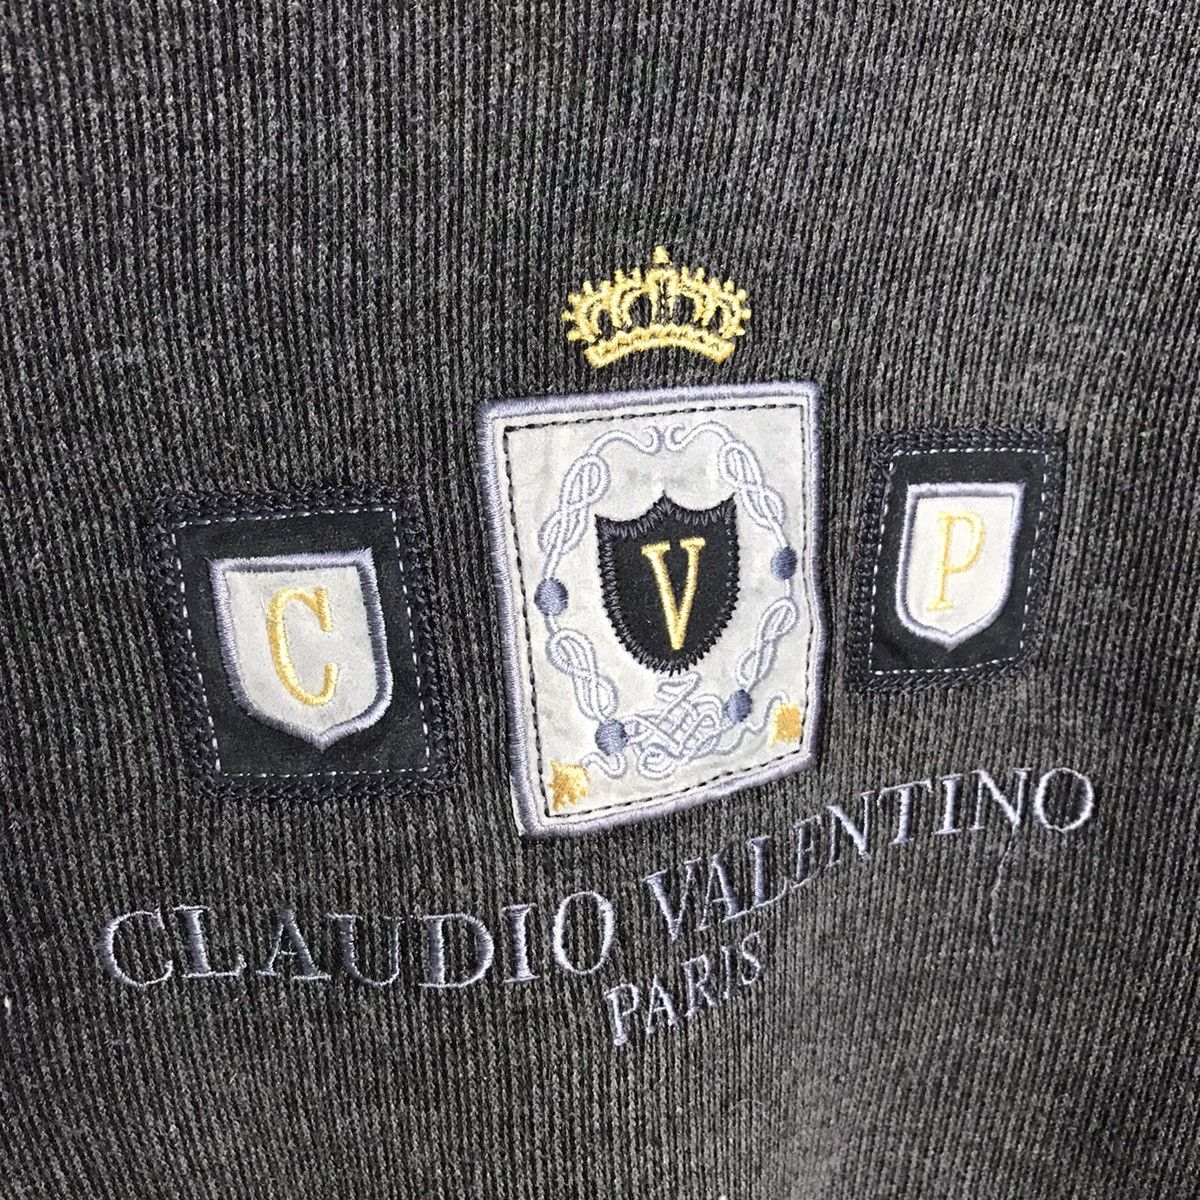 Claudio valentino paris embroidery logo crewneck - 4